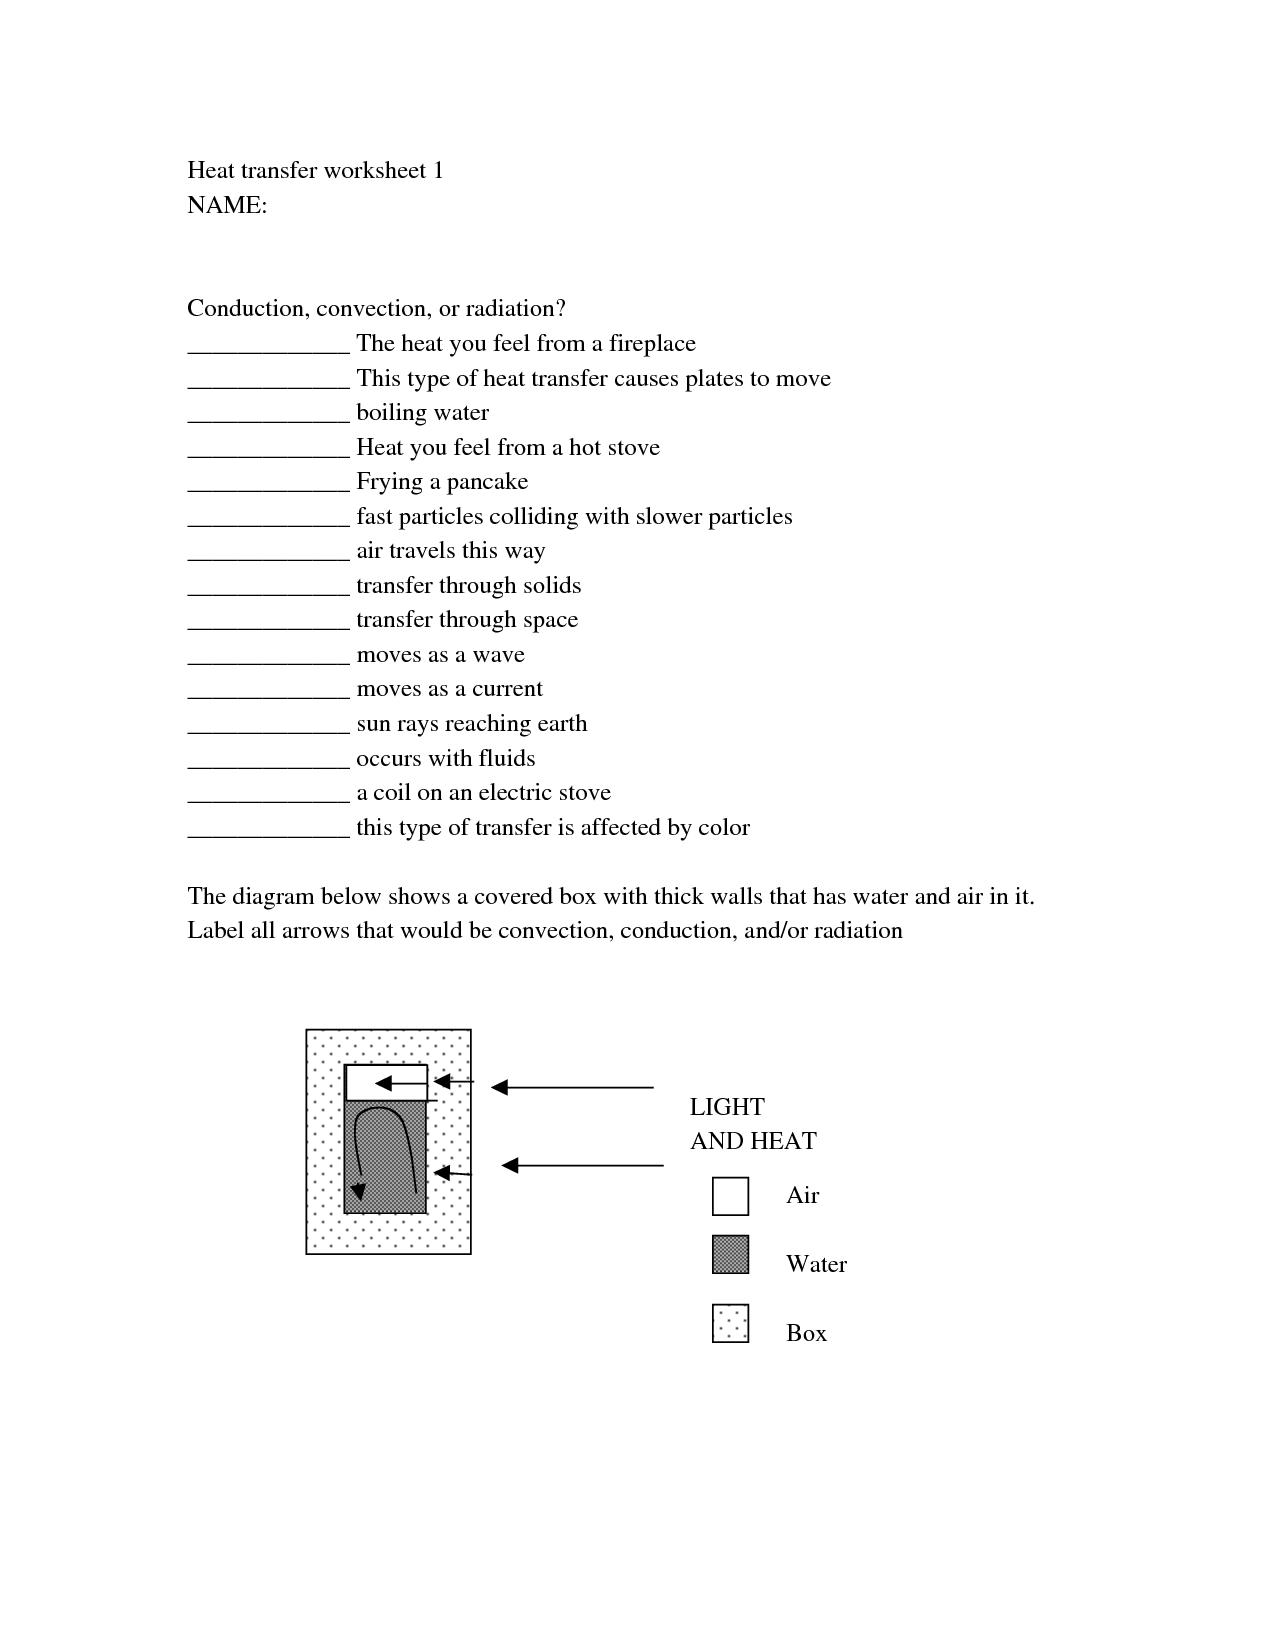 Heat Energy Transfer Worksheet Image